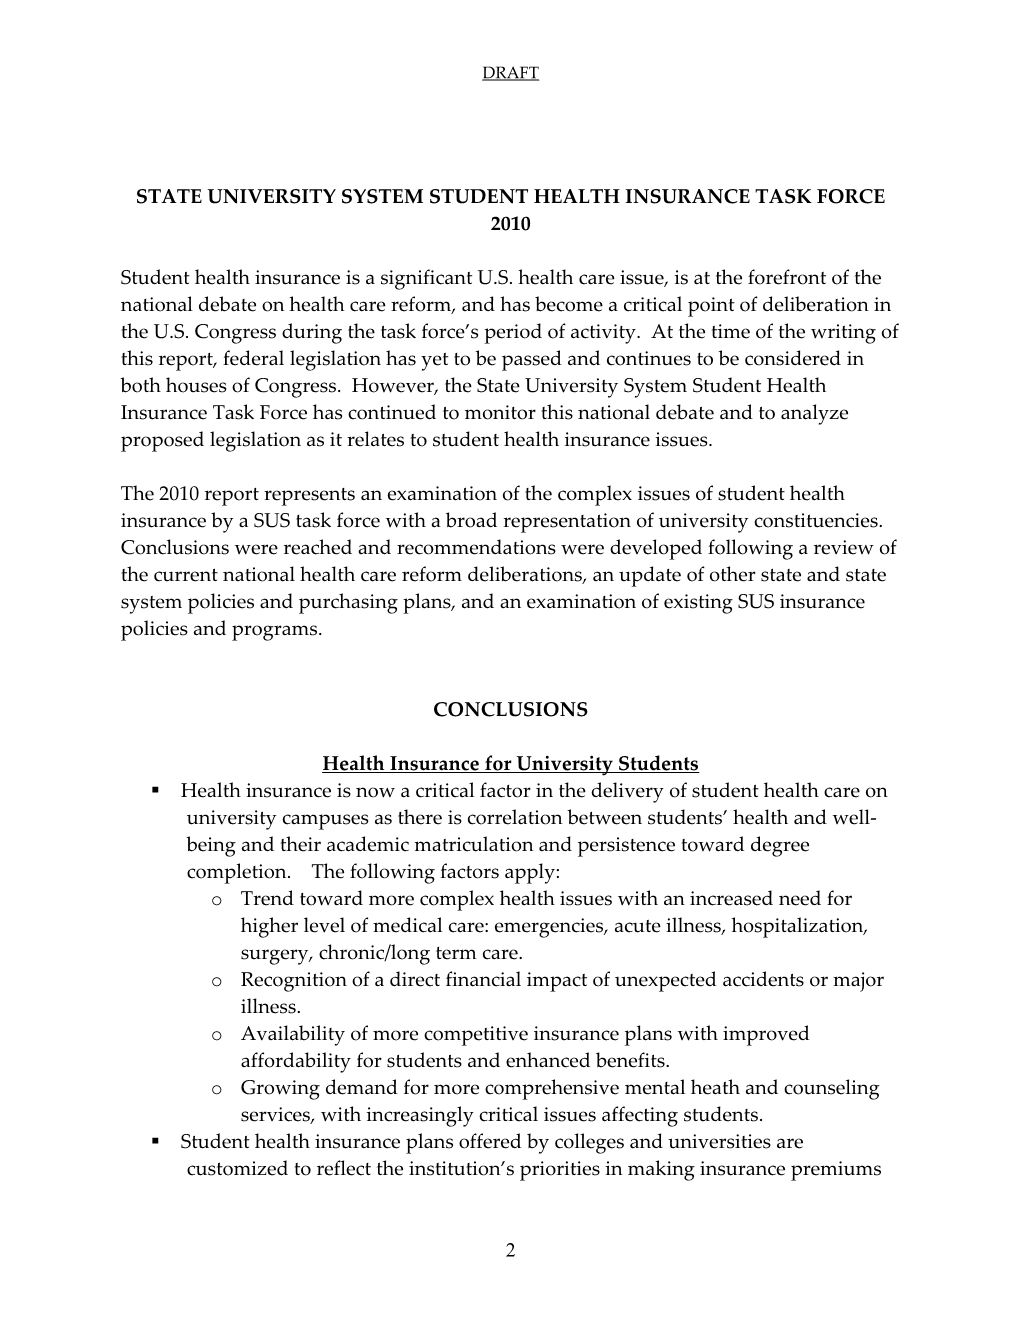 Stateuniversity System Student Health Insurance Task Force